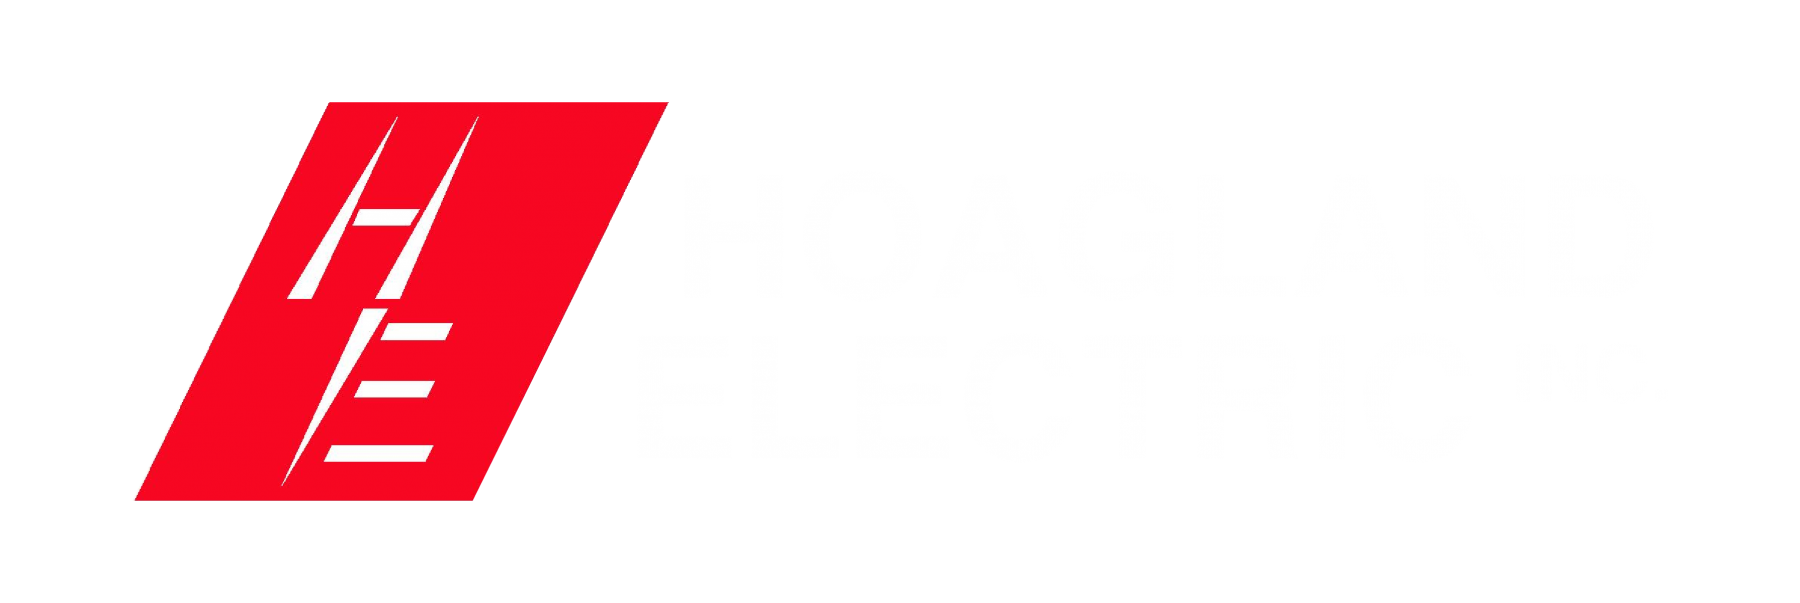 Hoagland Electric